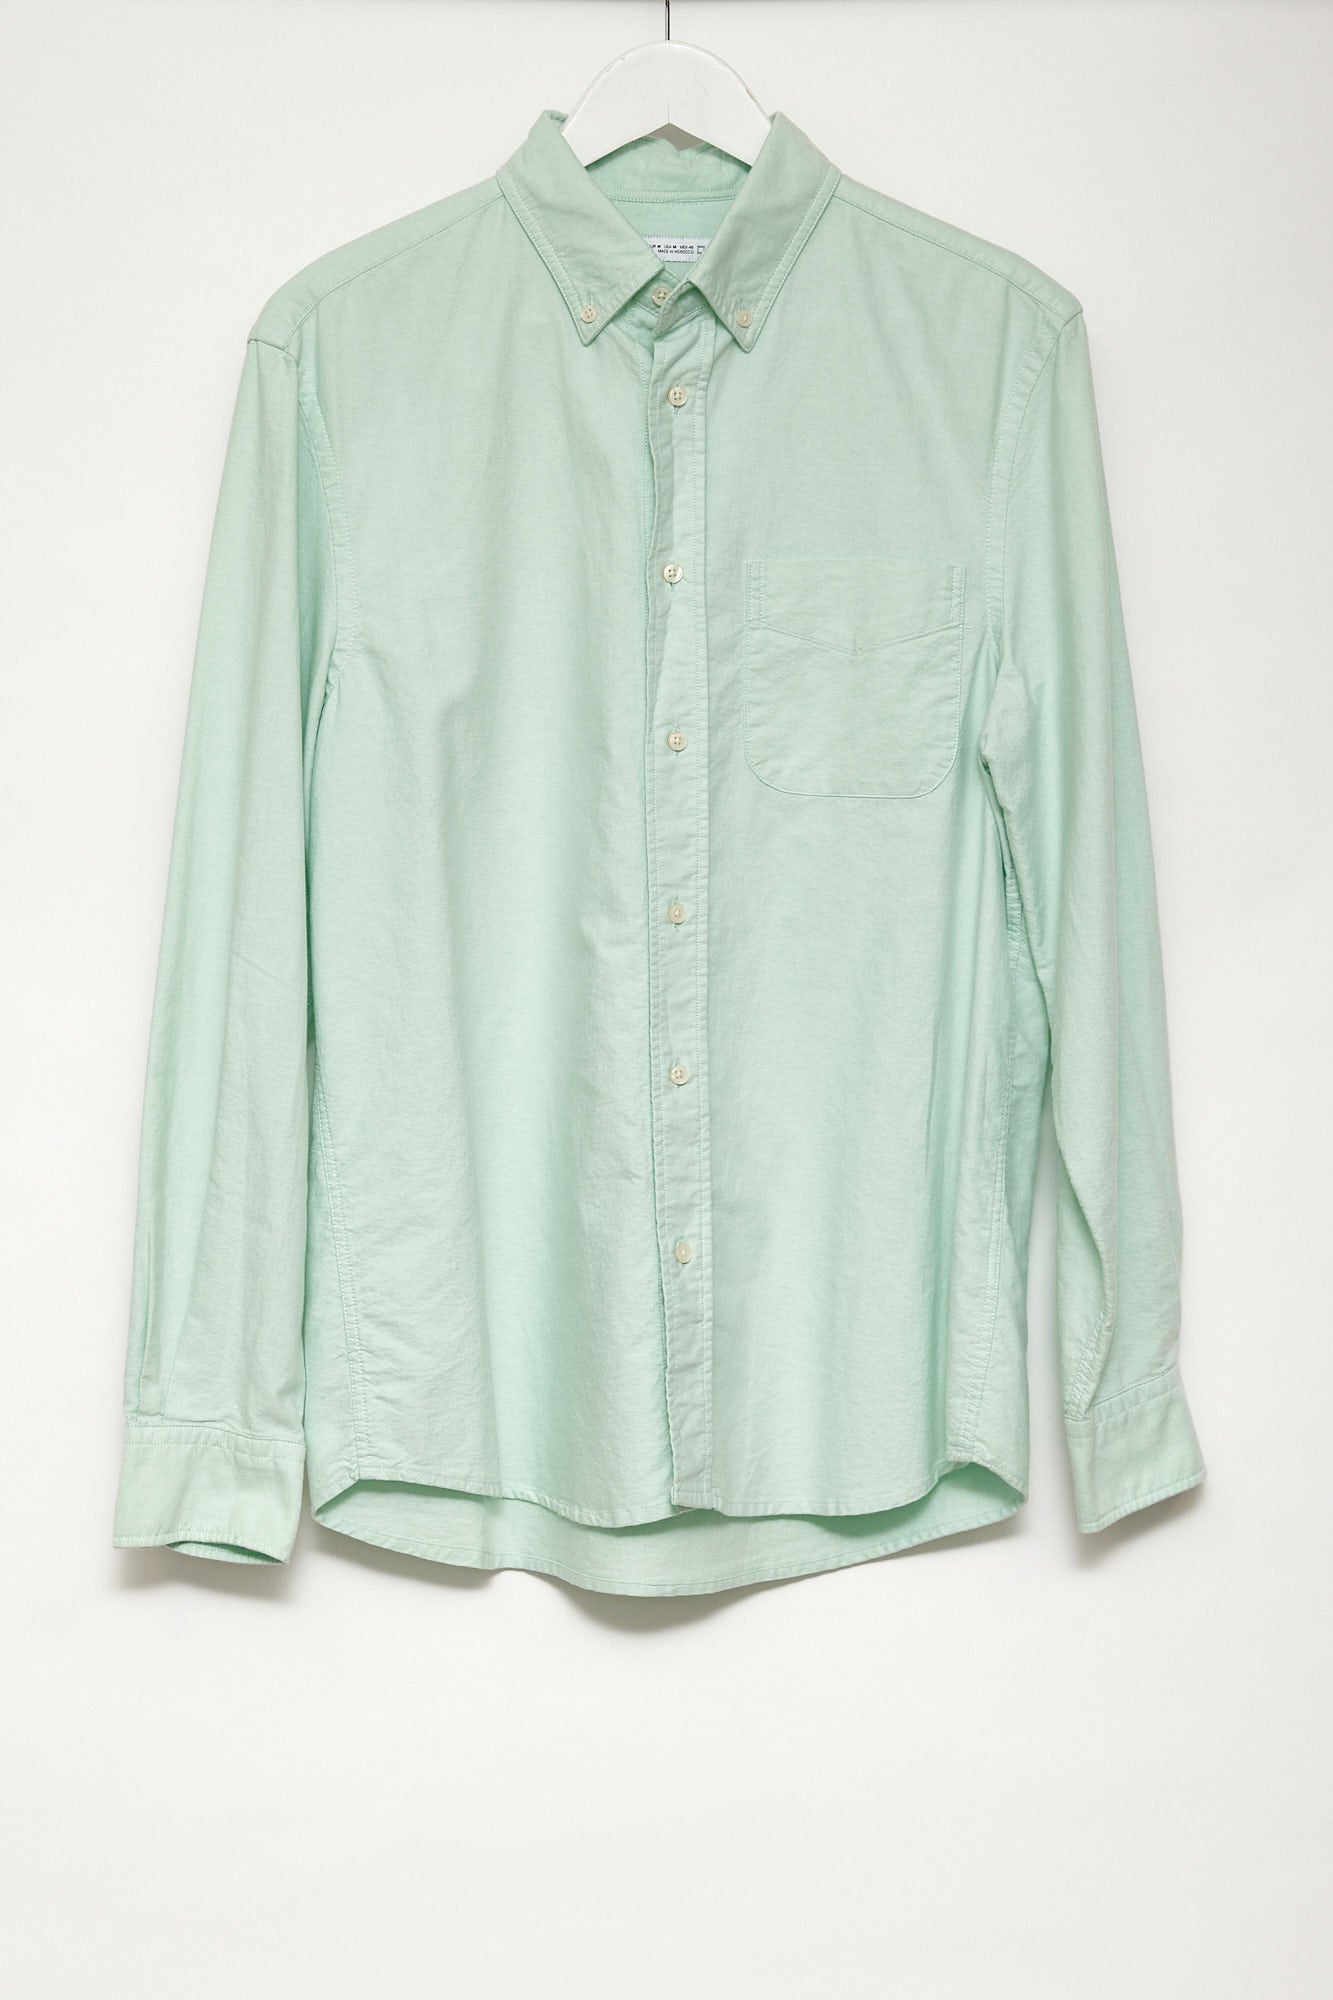 Mens Zara Light green Oxford shirt size Large